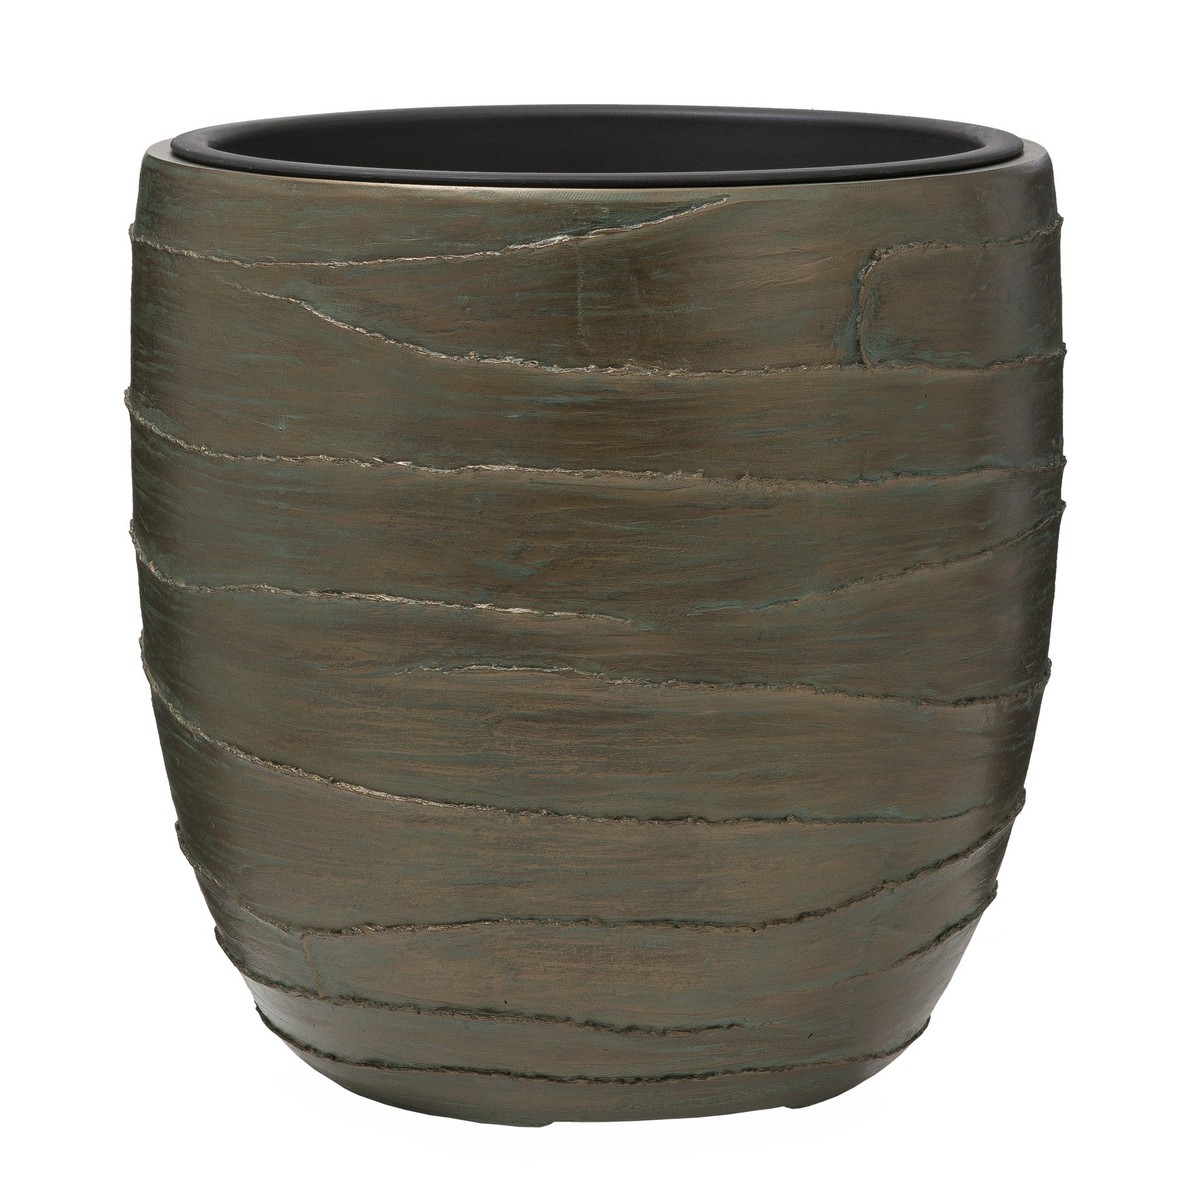   Jersey Vase Ø 31, H 65cm, S1   Ø49/48 bronze